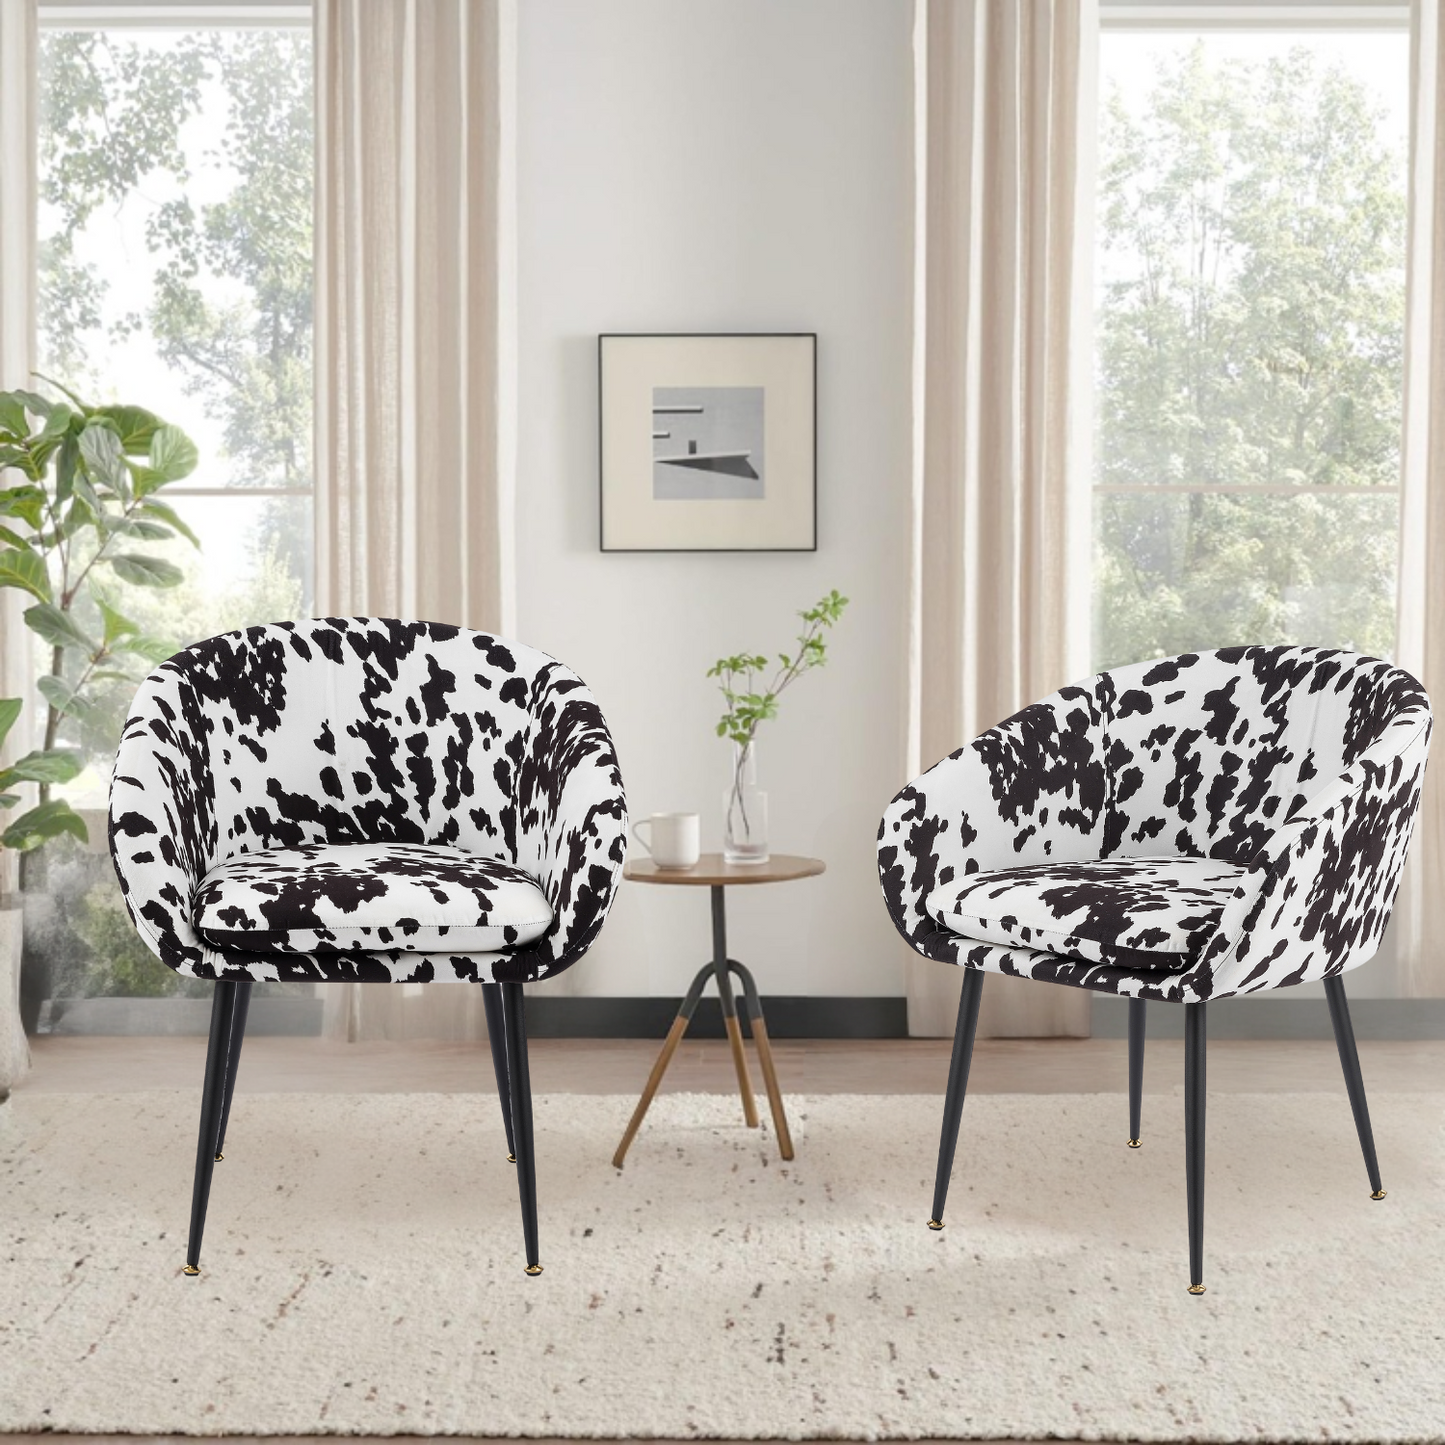 Cowprint Comfort Chair, set of 4